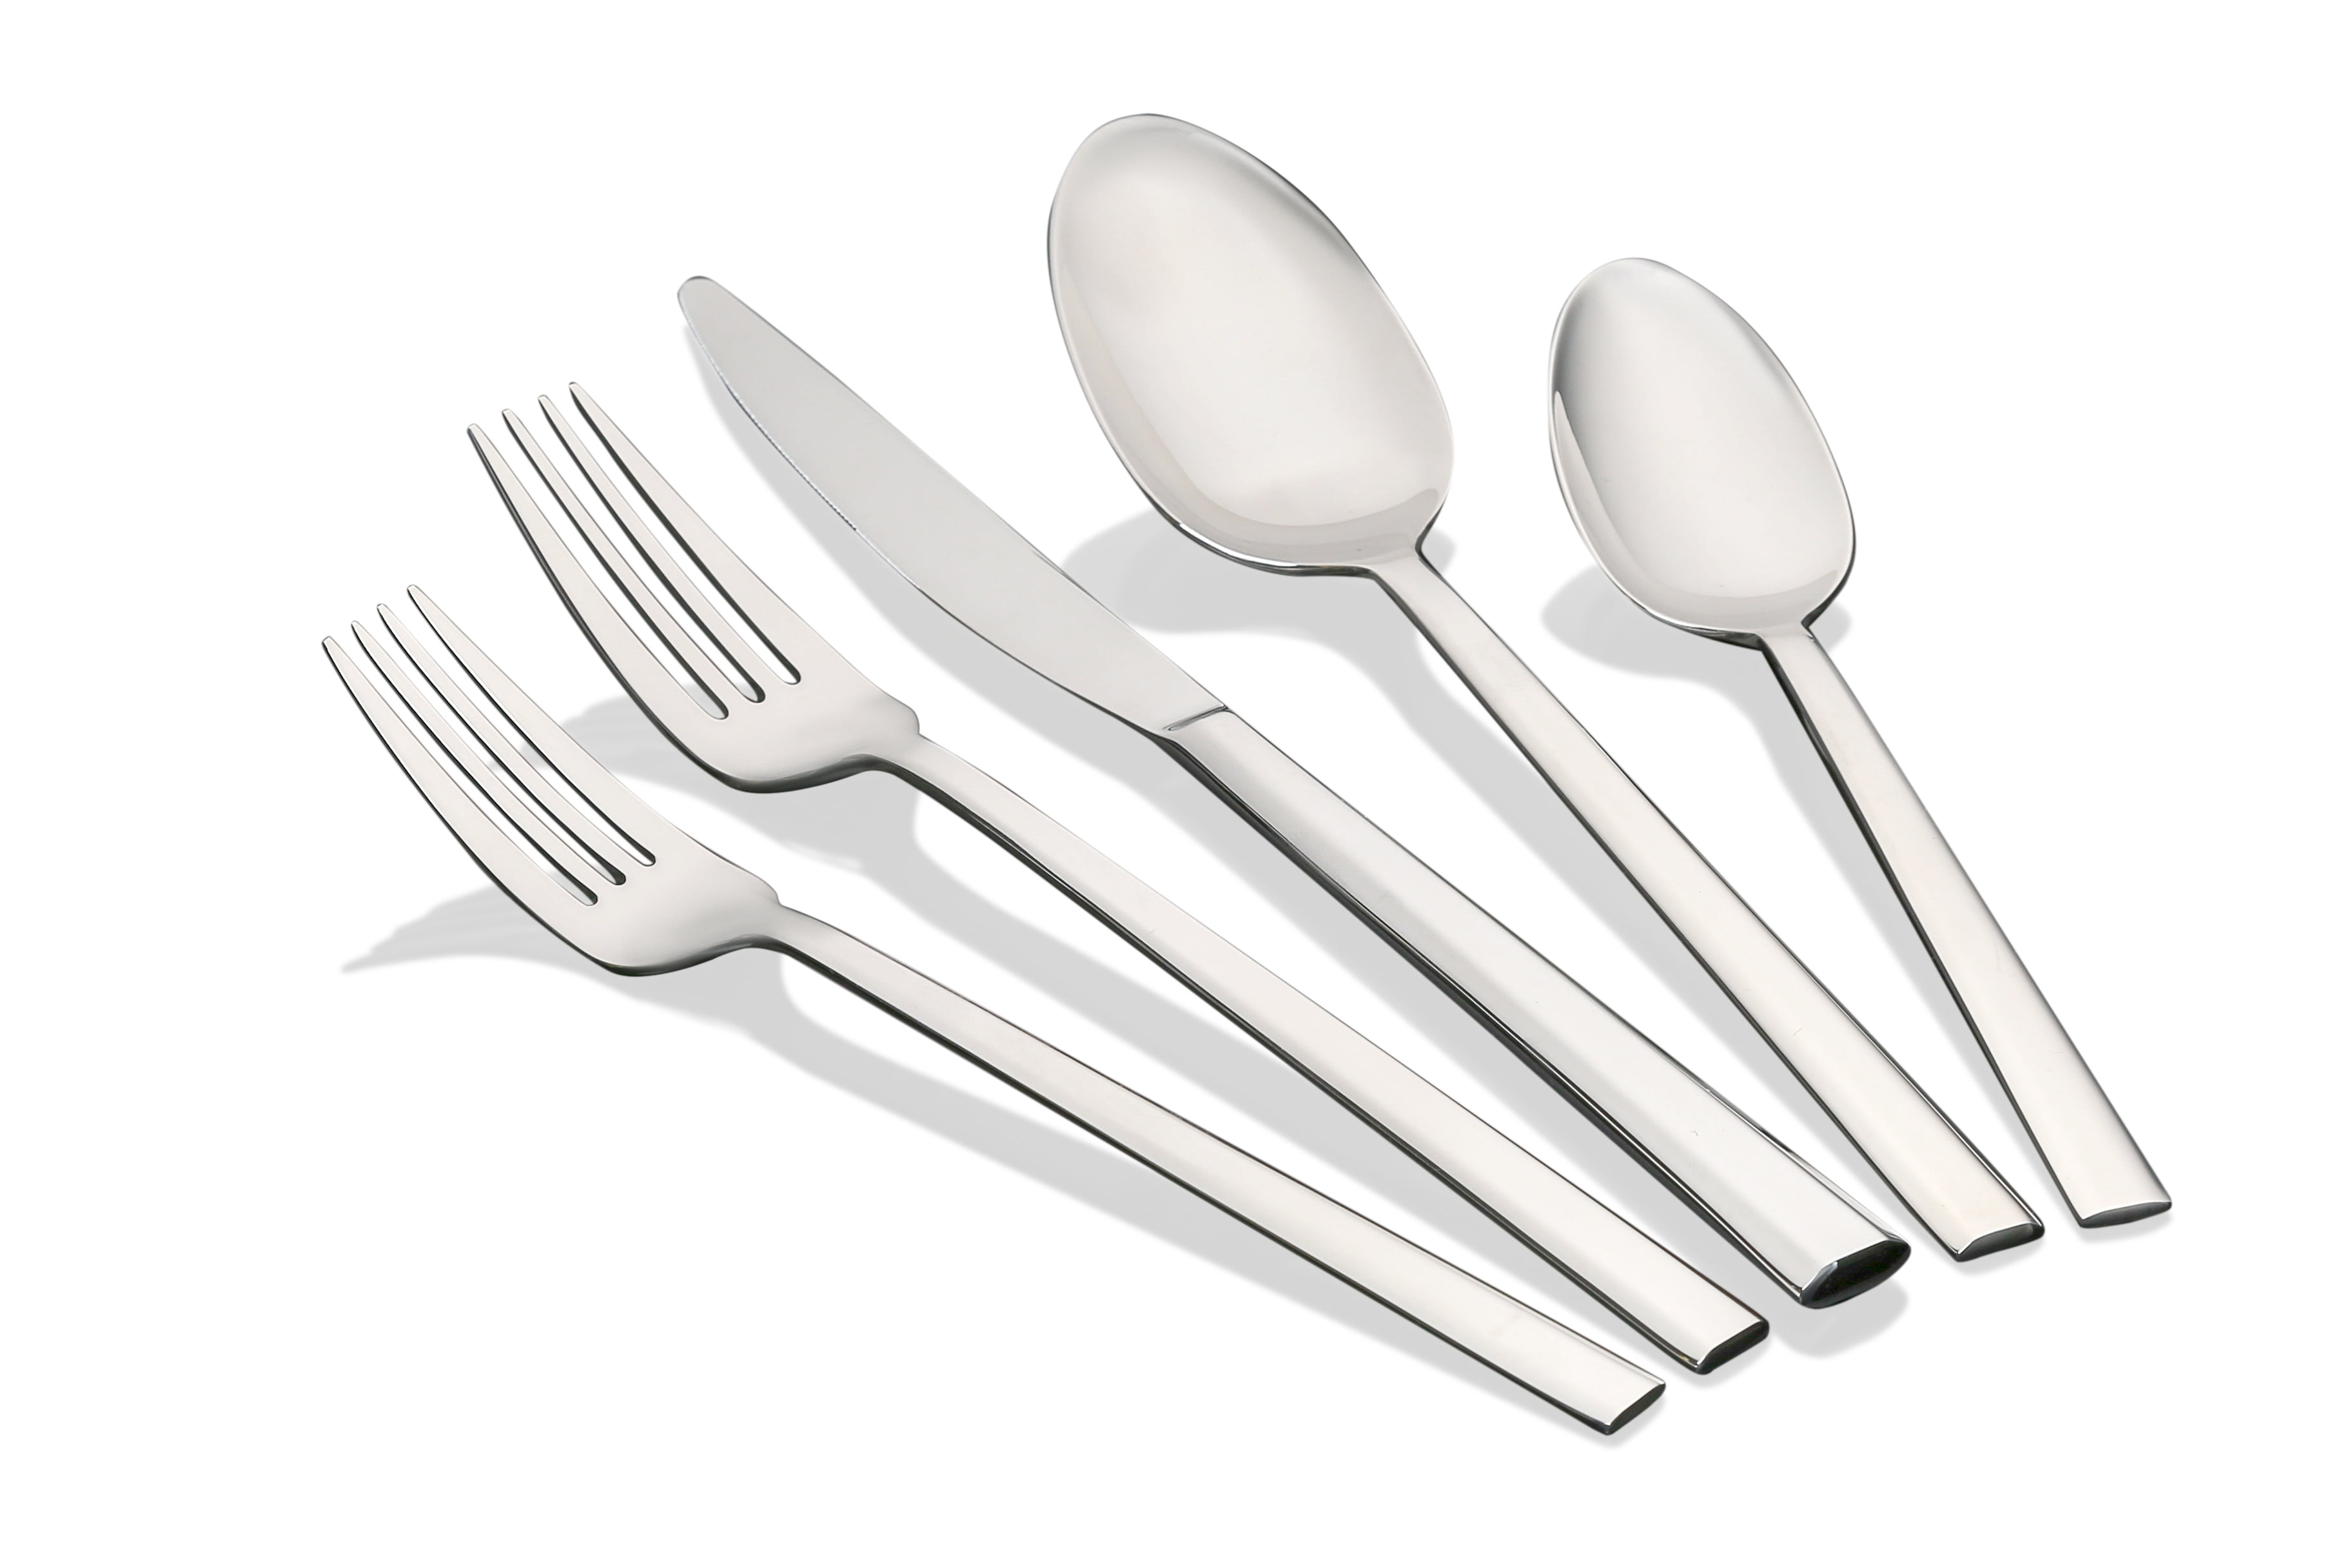 20 Piece Silverware Flatware Set – 18/10 Stainless Steel Cutlery with Stainless Steel Silverware 18/10